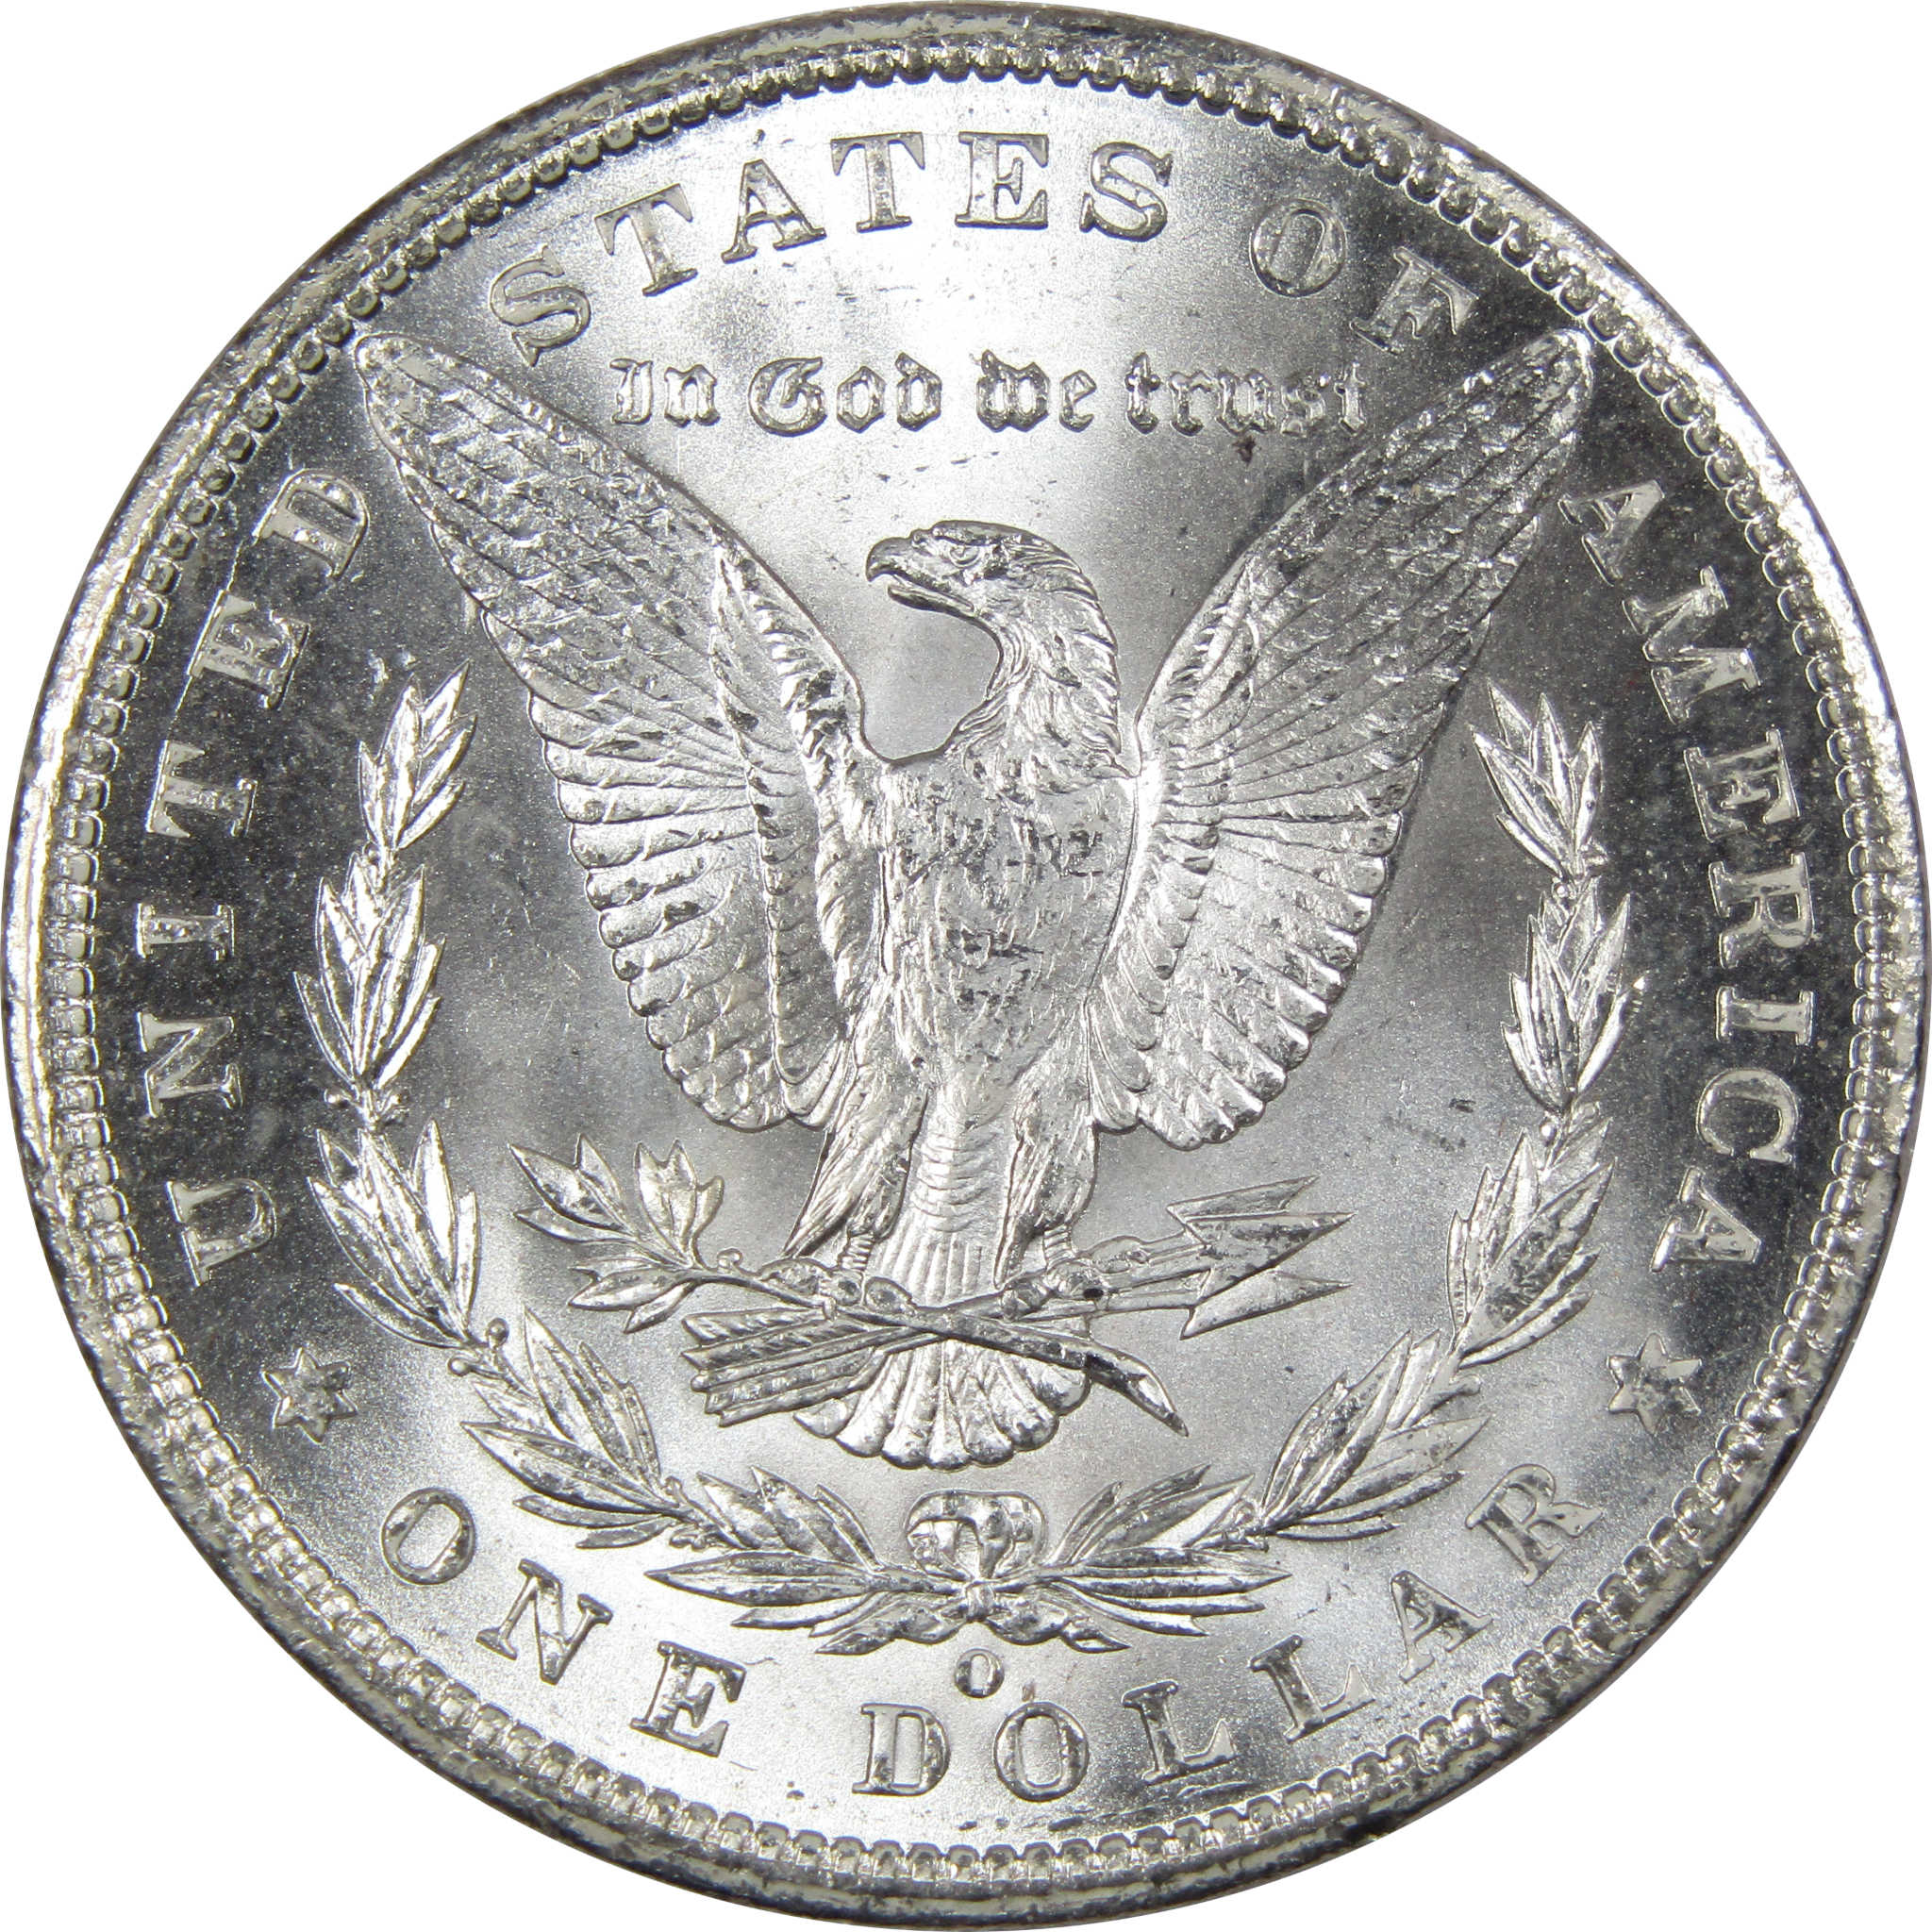 1900 O Morgan Dollar BU Uncirculated Mint State 90% Silver SKU:IPC9777 - Morgan coin - Morgan silver dollar - Morgan silver dollar for sale - Profile Coins &amp; Collectibles